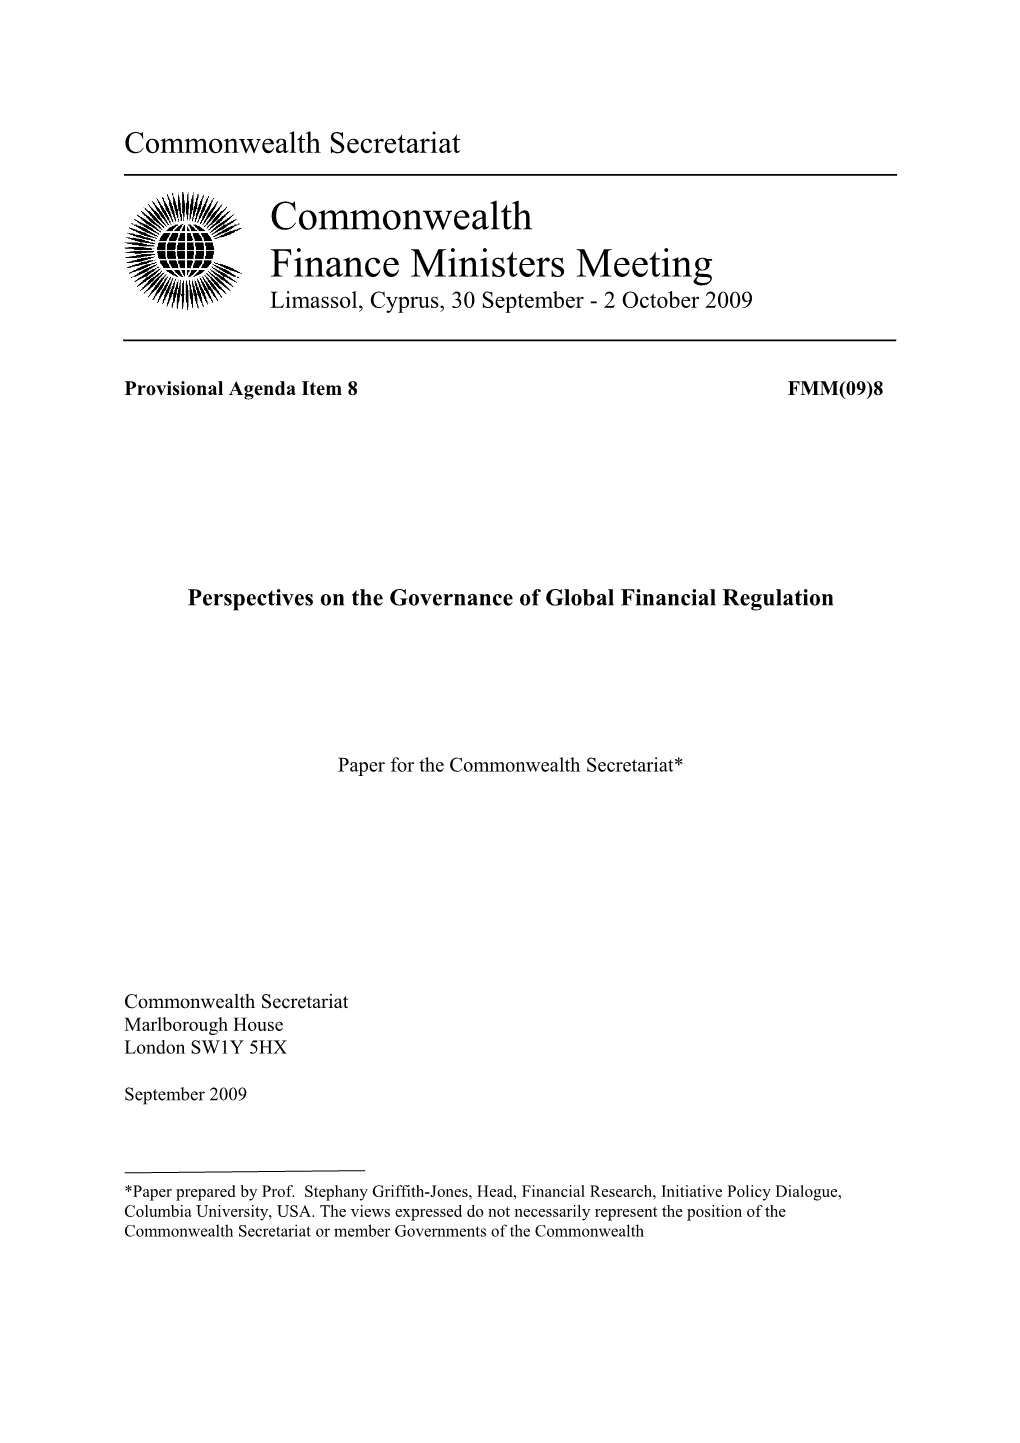 Reforming Governance of International Financial Regulation; Have the G20 Done Enough